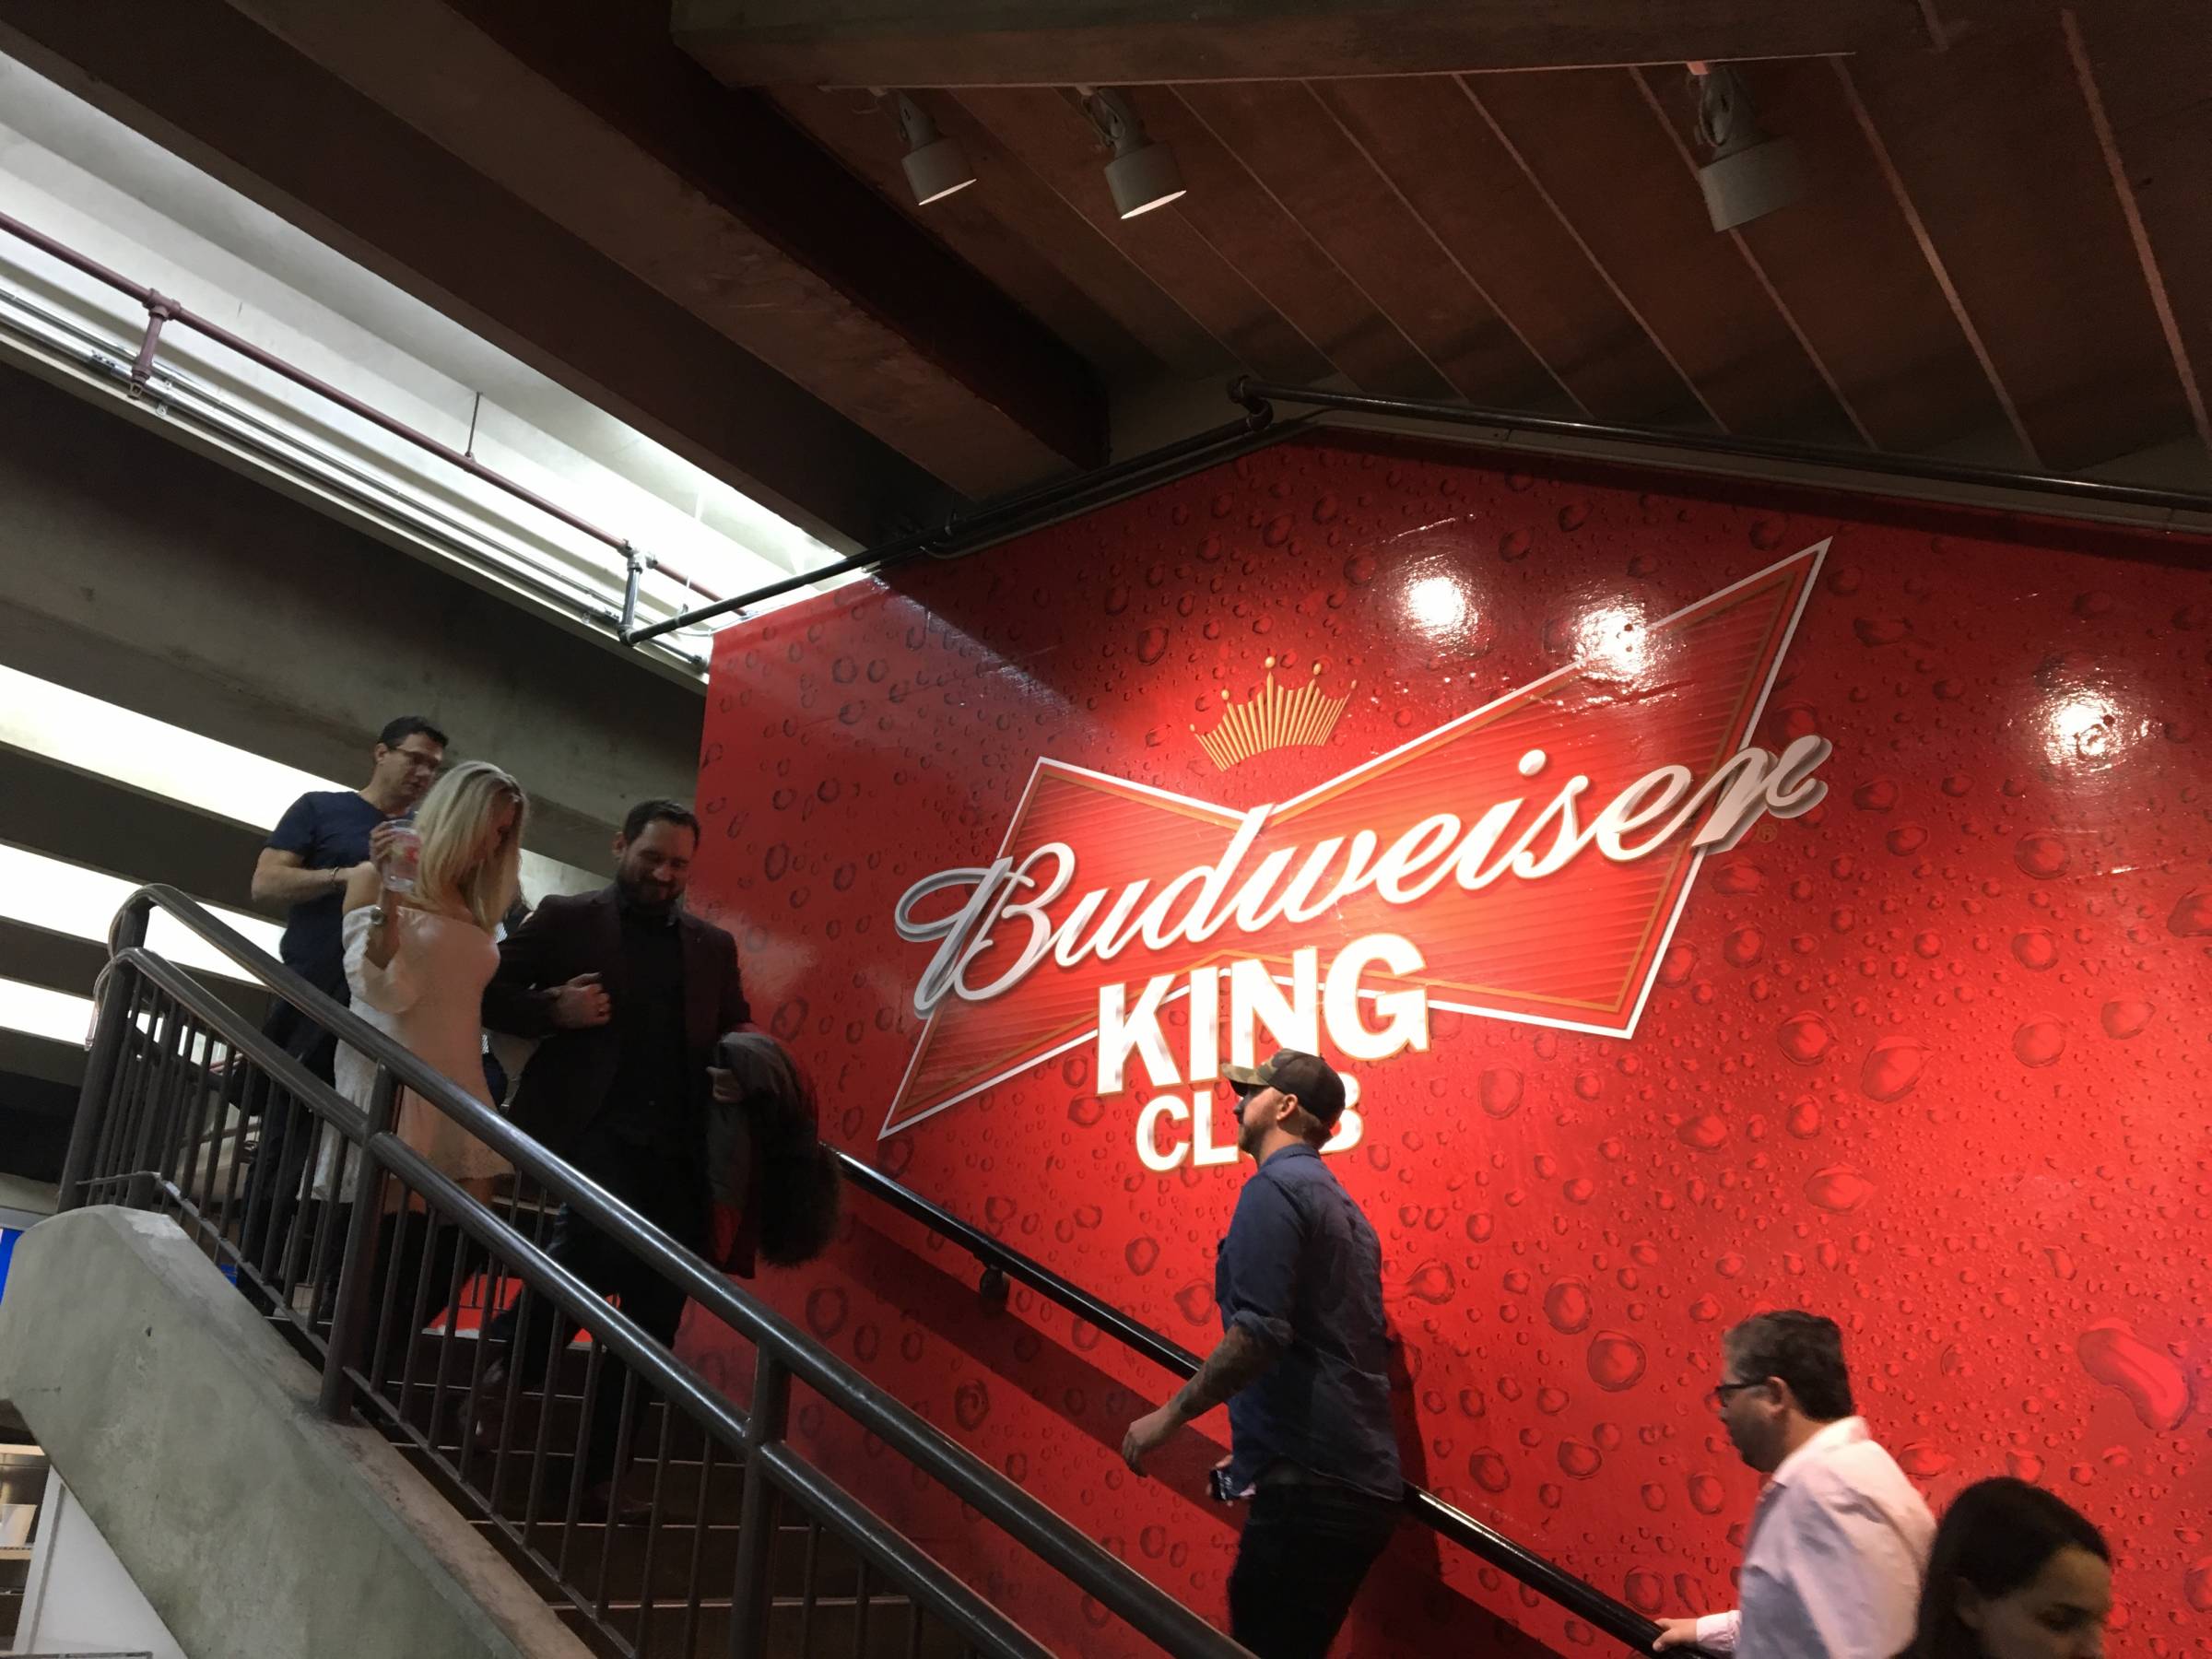 Budweiser King Club at Scotiabank Saddledome